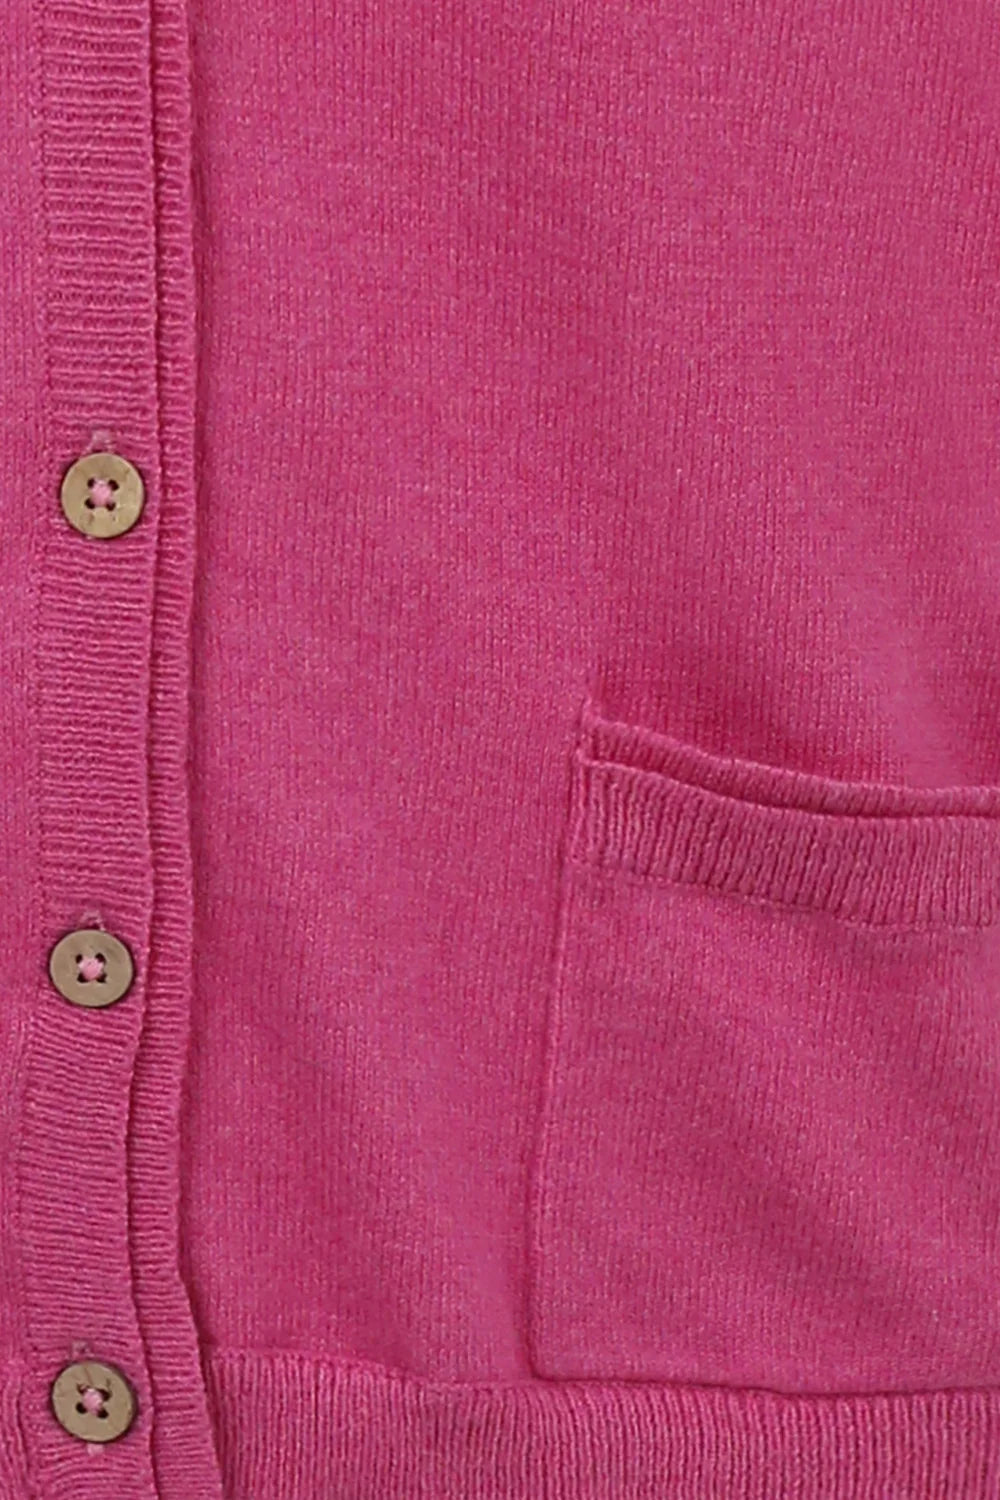 Mistral Cactus Flower Pink Double Rib Detail Melange Cotton Cardi